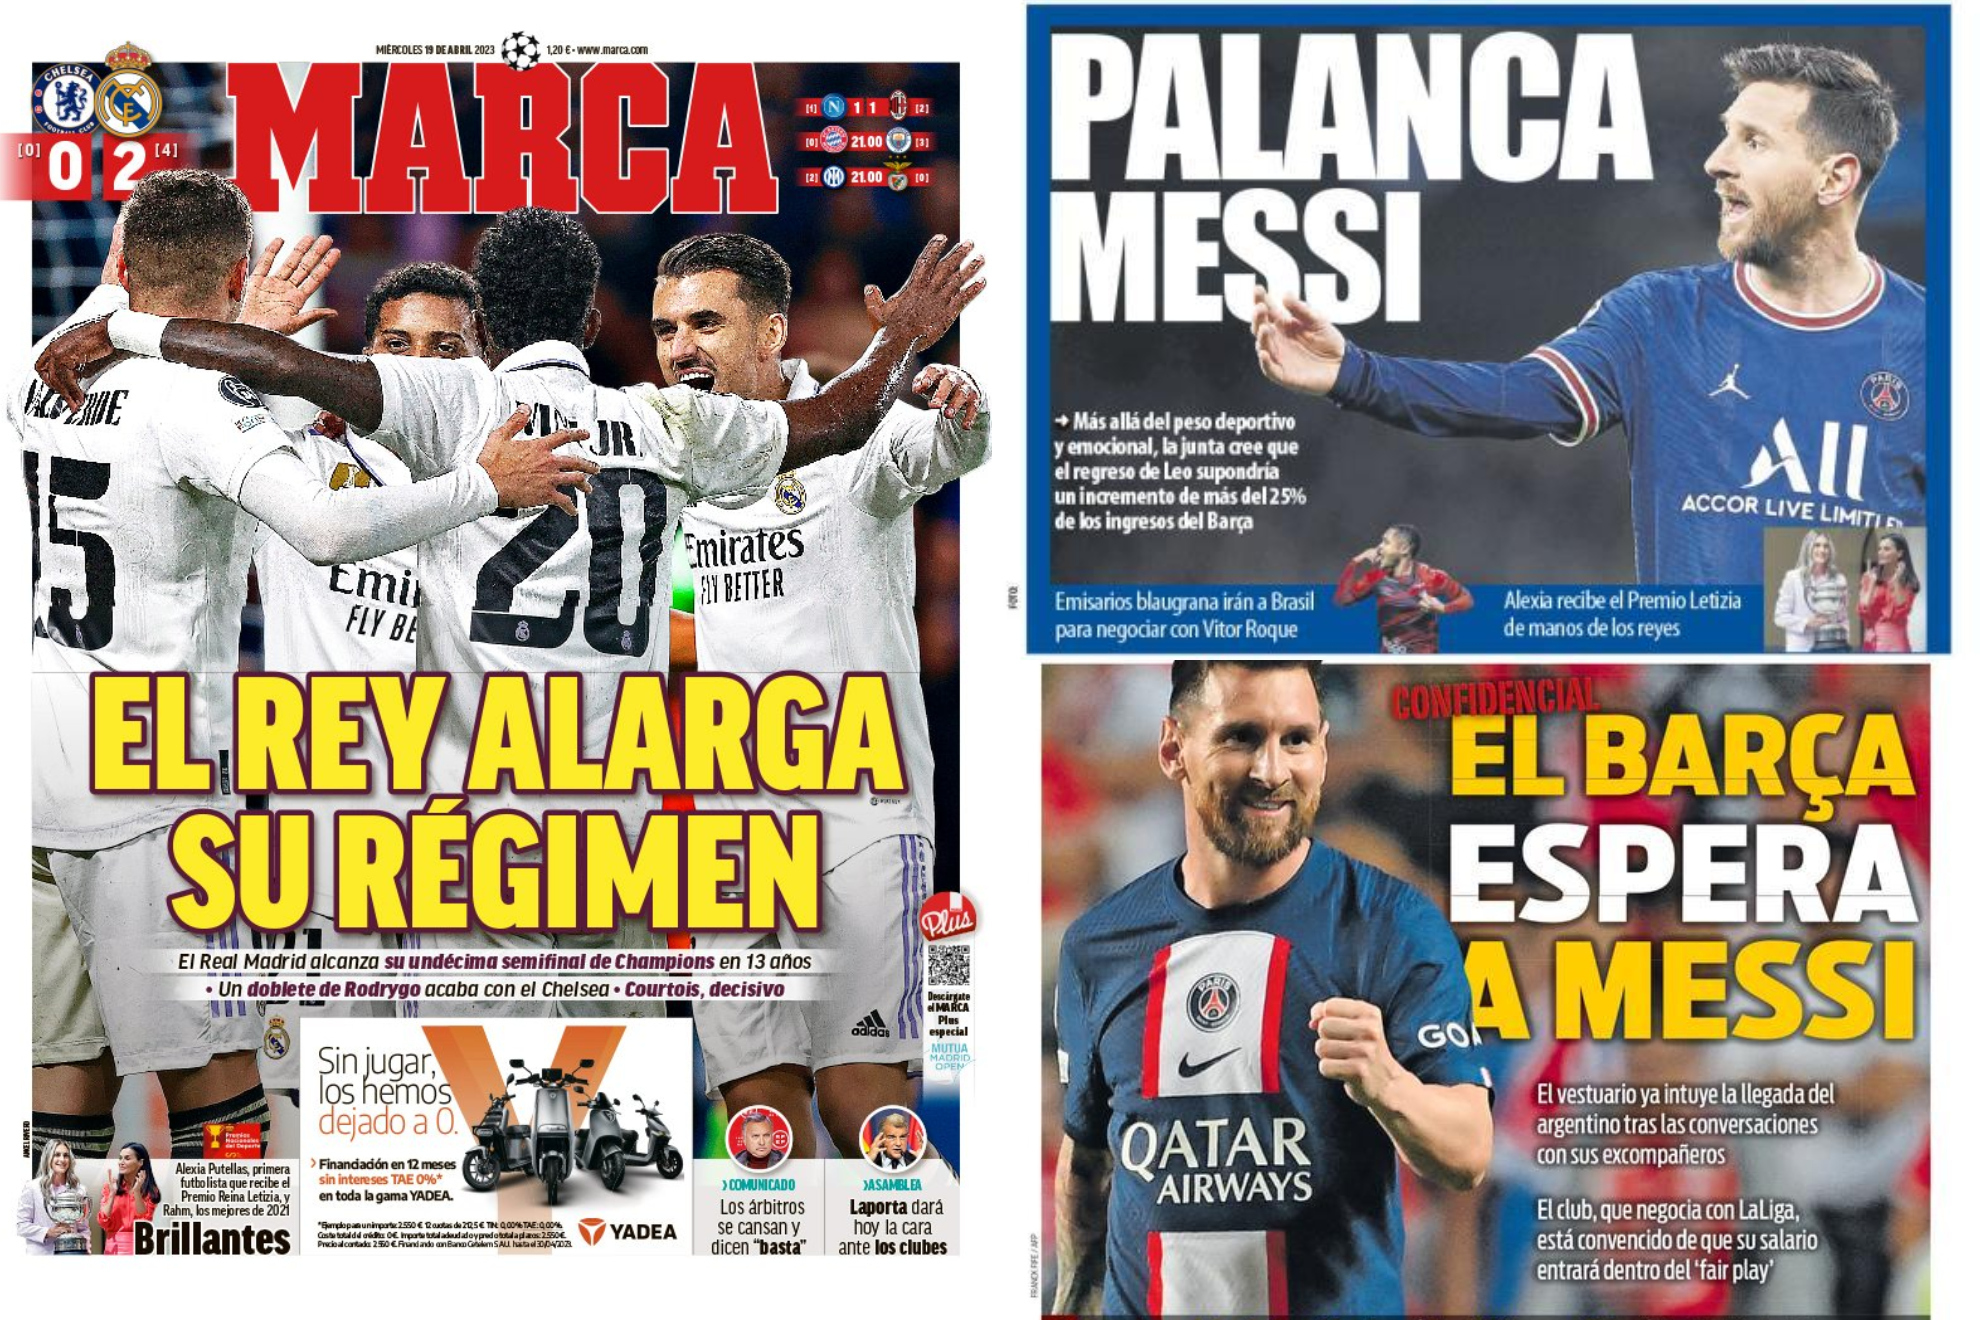 La reaccin de la prensa inglesa ante la superioridad del Real Madrid